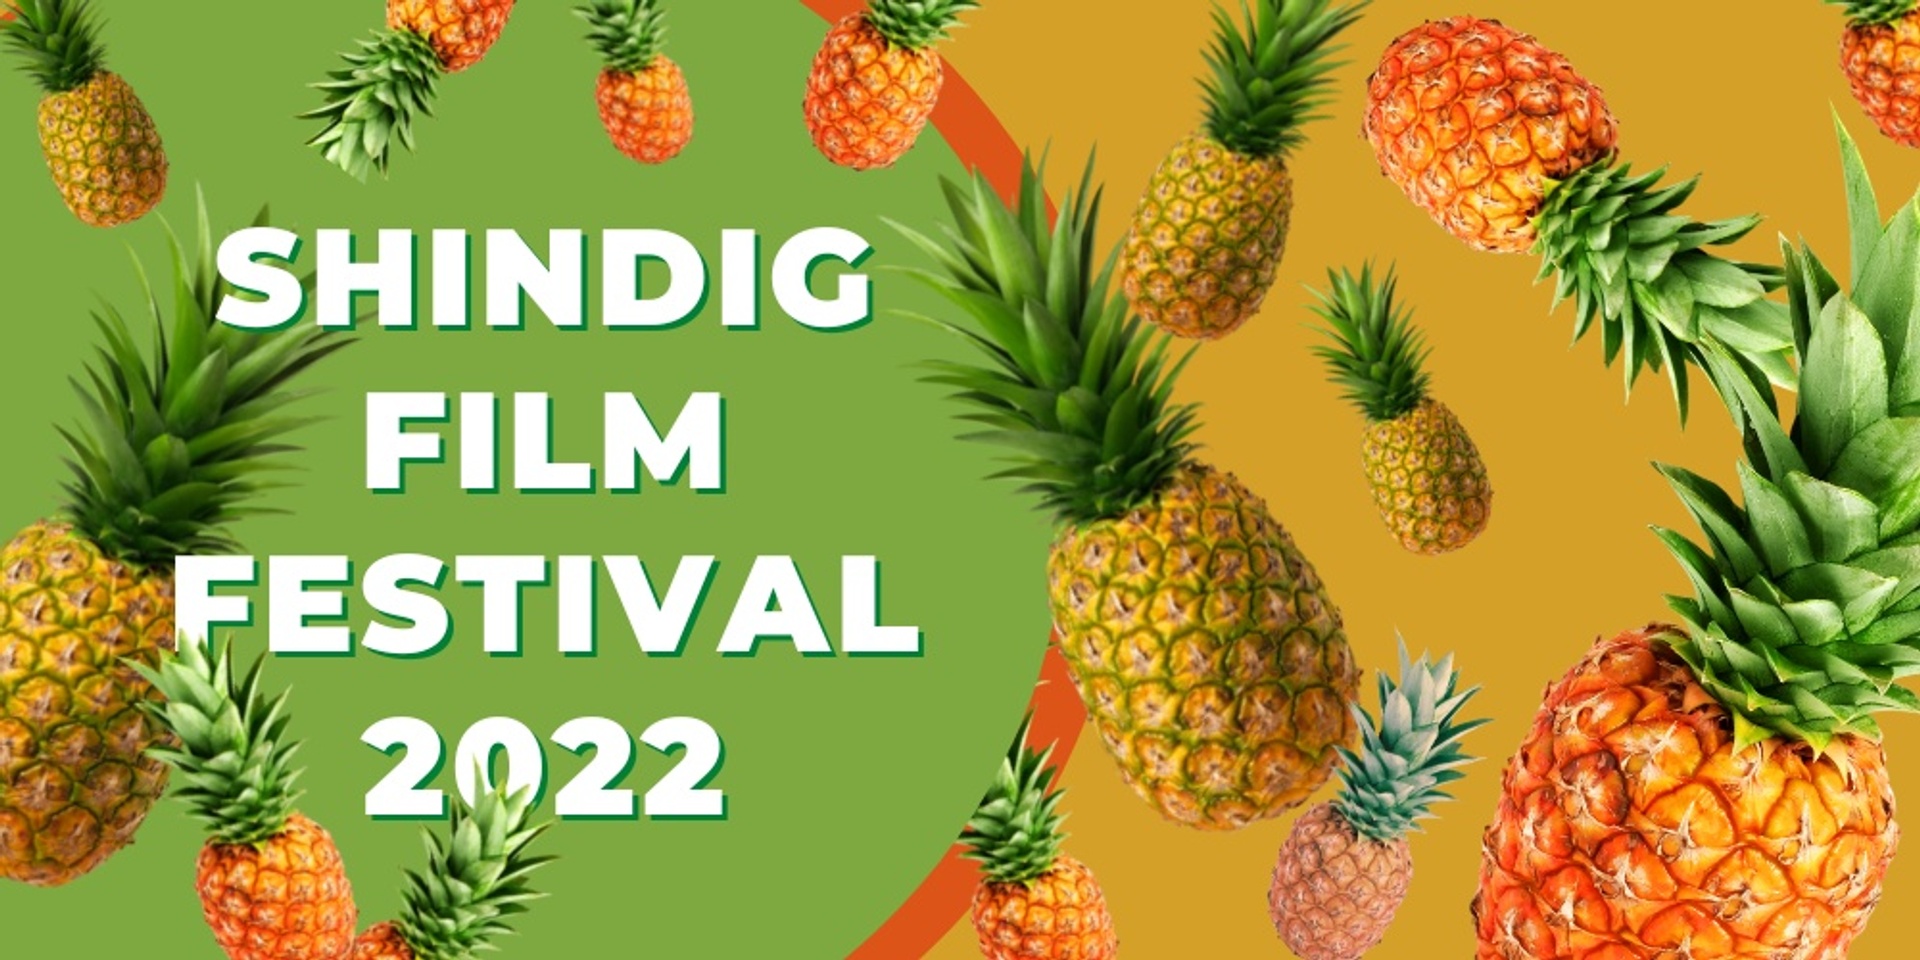 Shindig Film Festival 2022